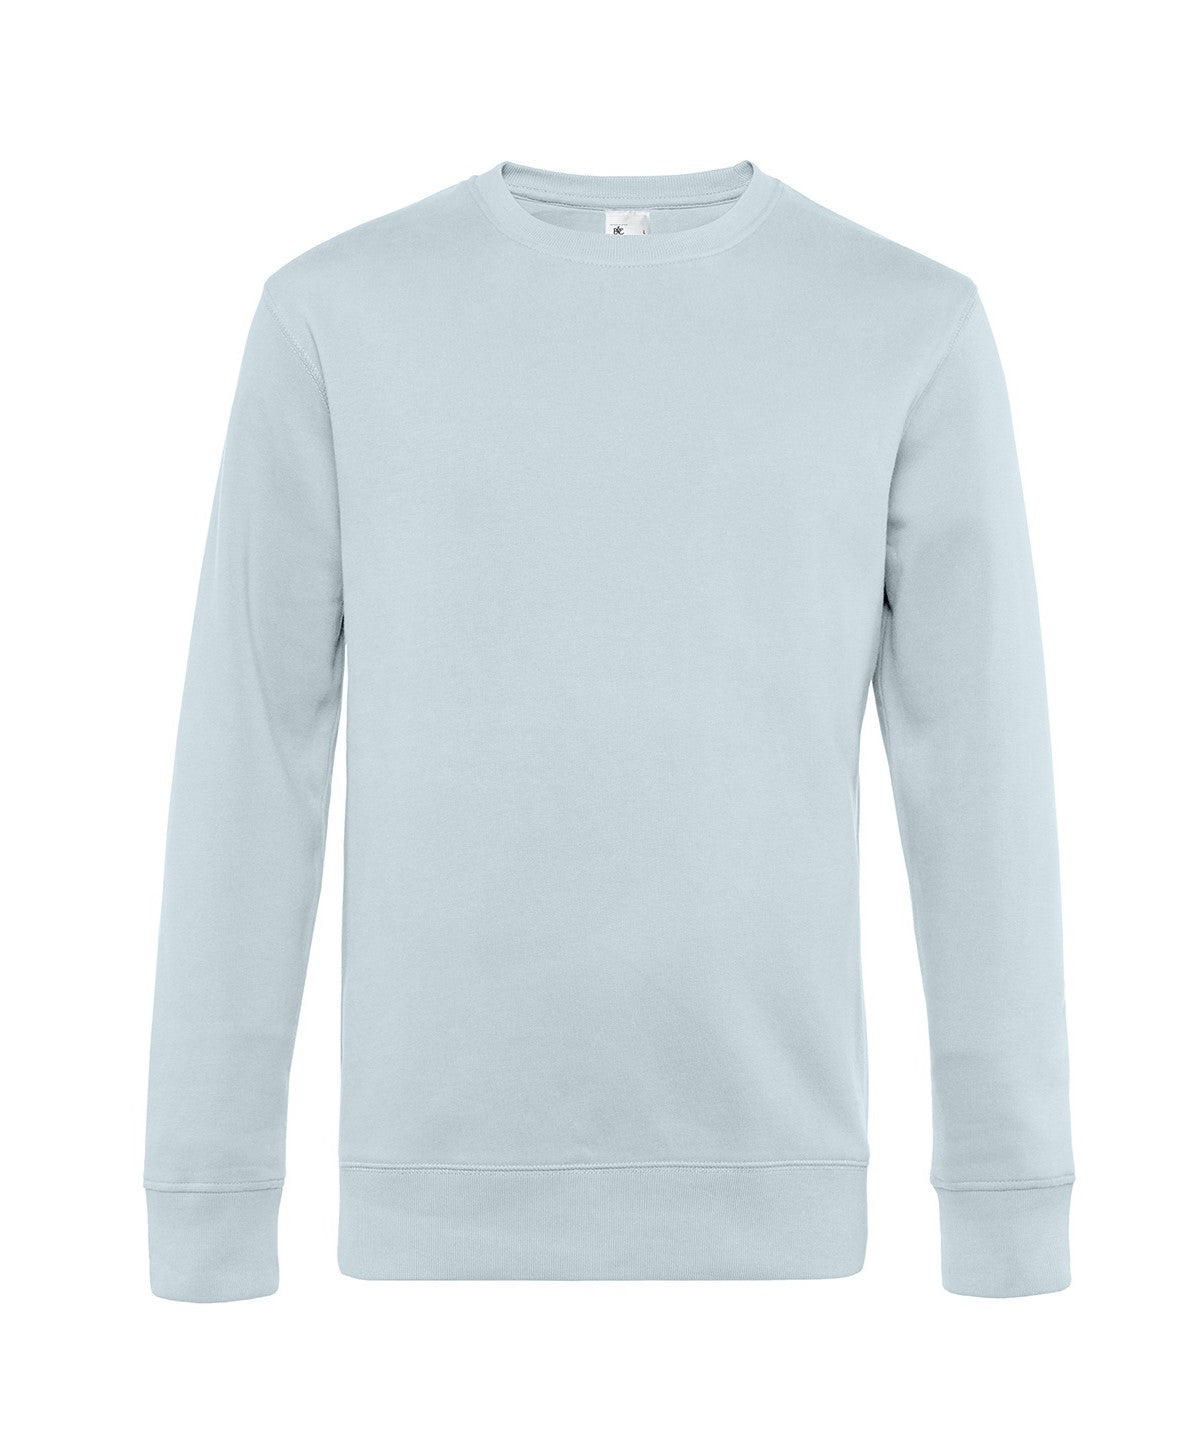 Personalised Sweatshirts - Dark Grey B&C Collection B&C KING Crew Neck